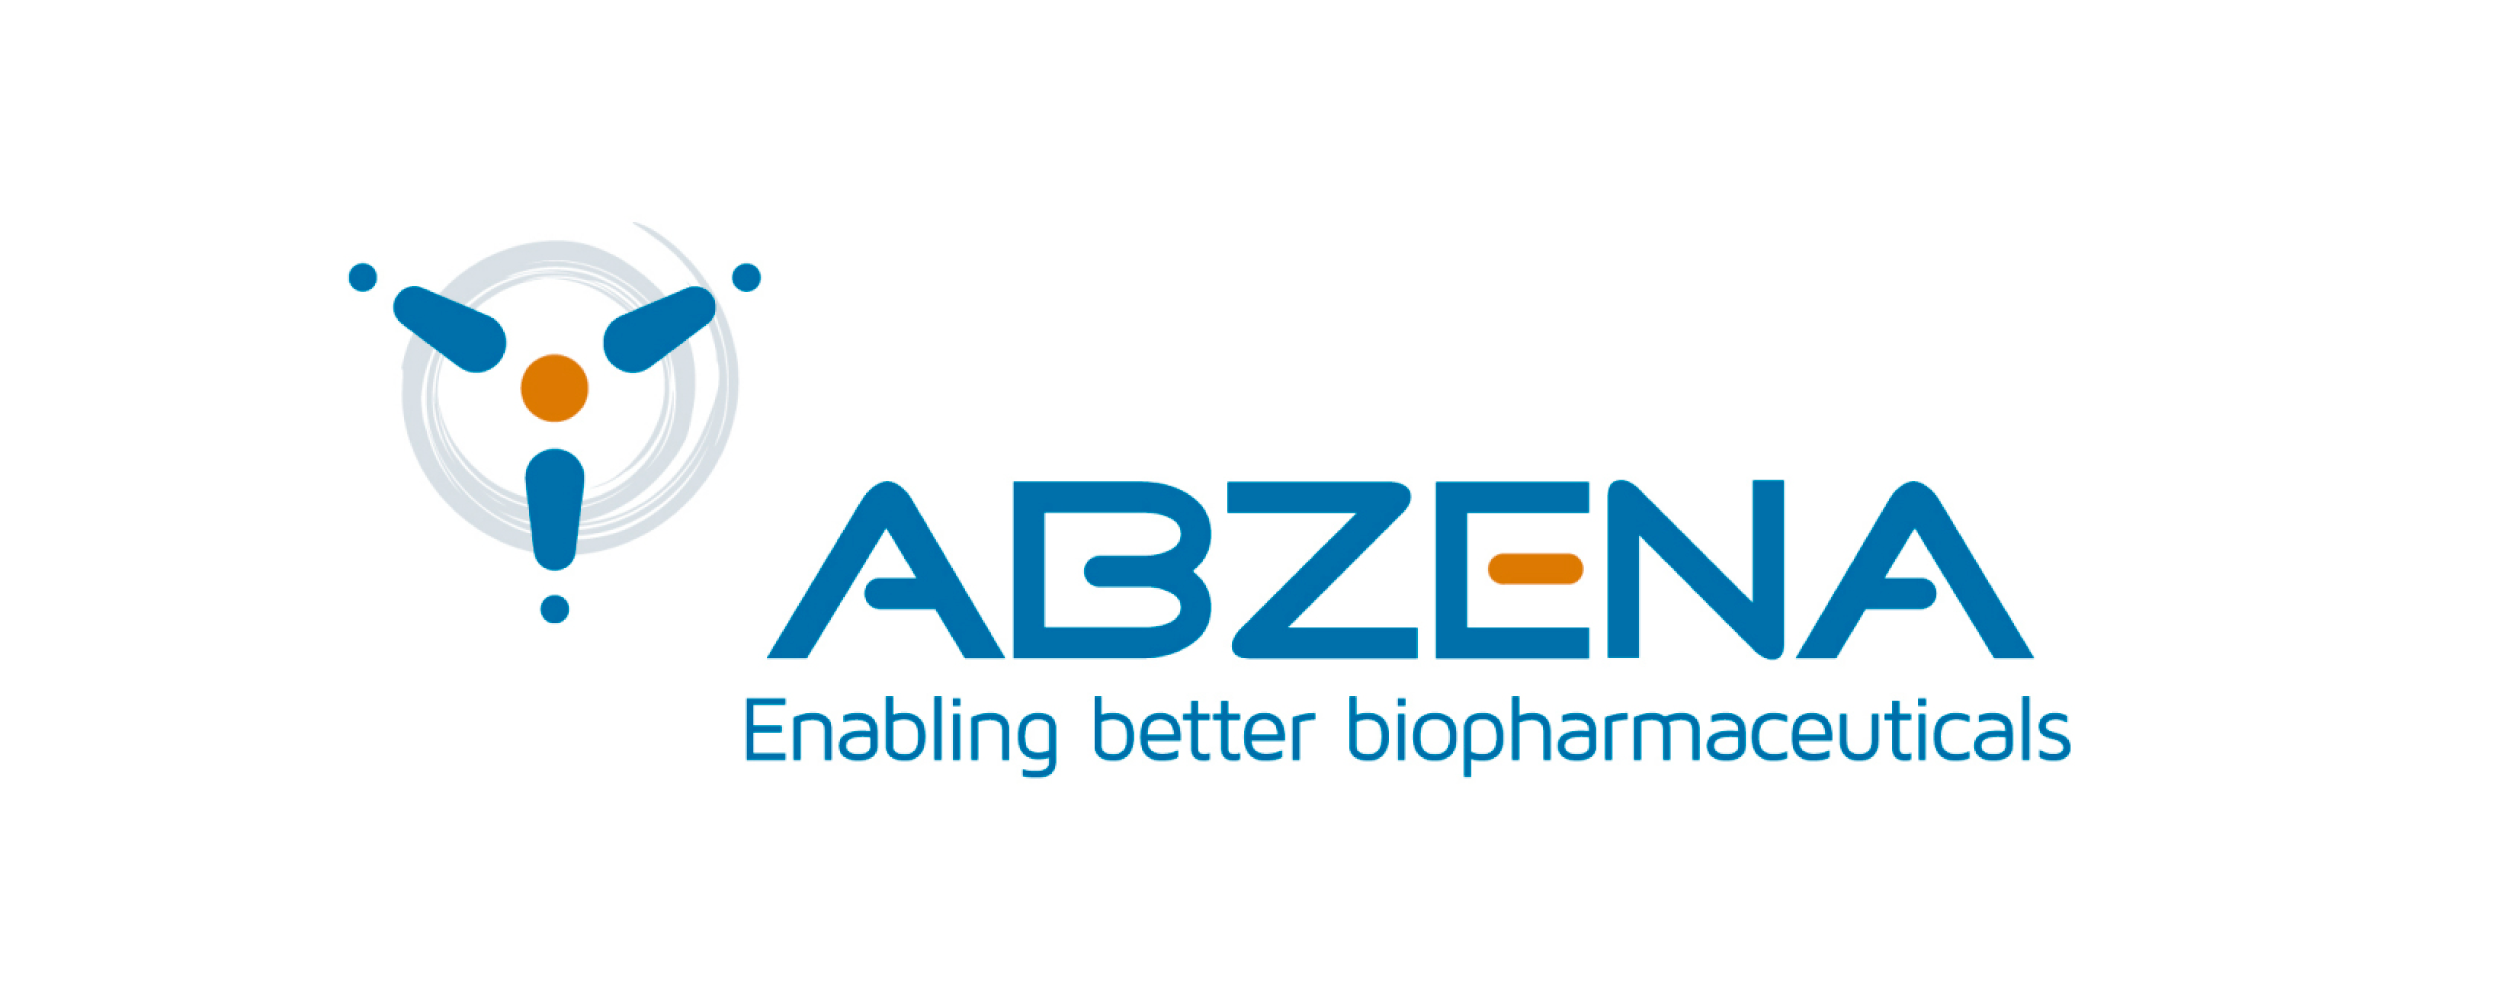 Abzena logo